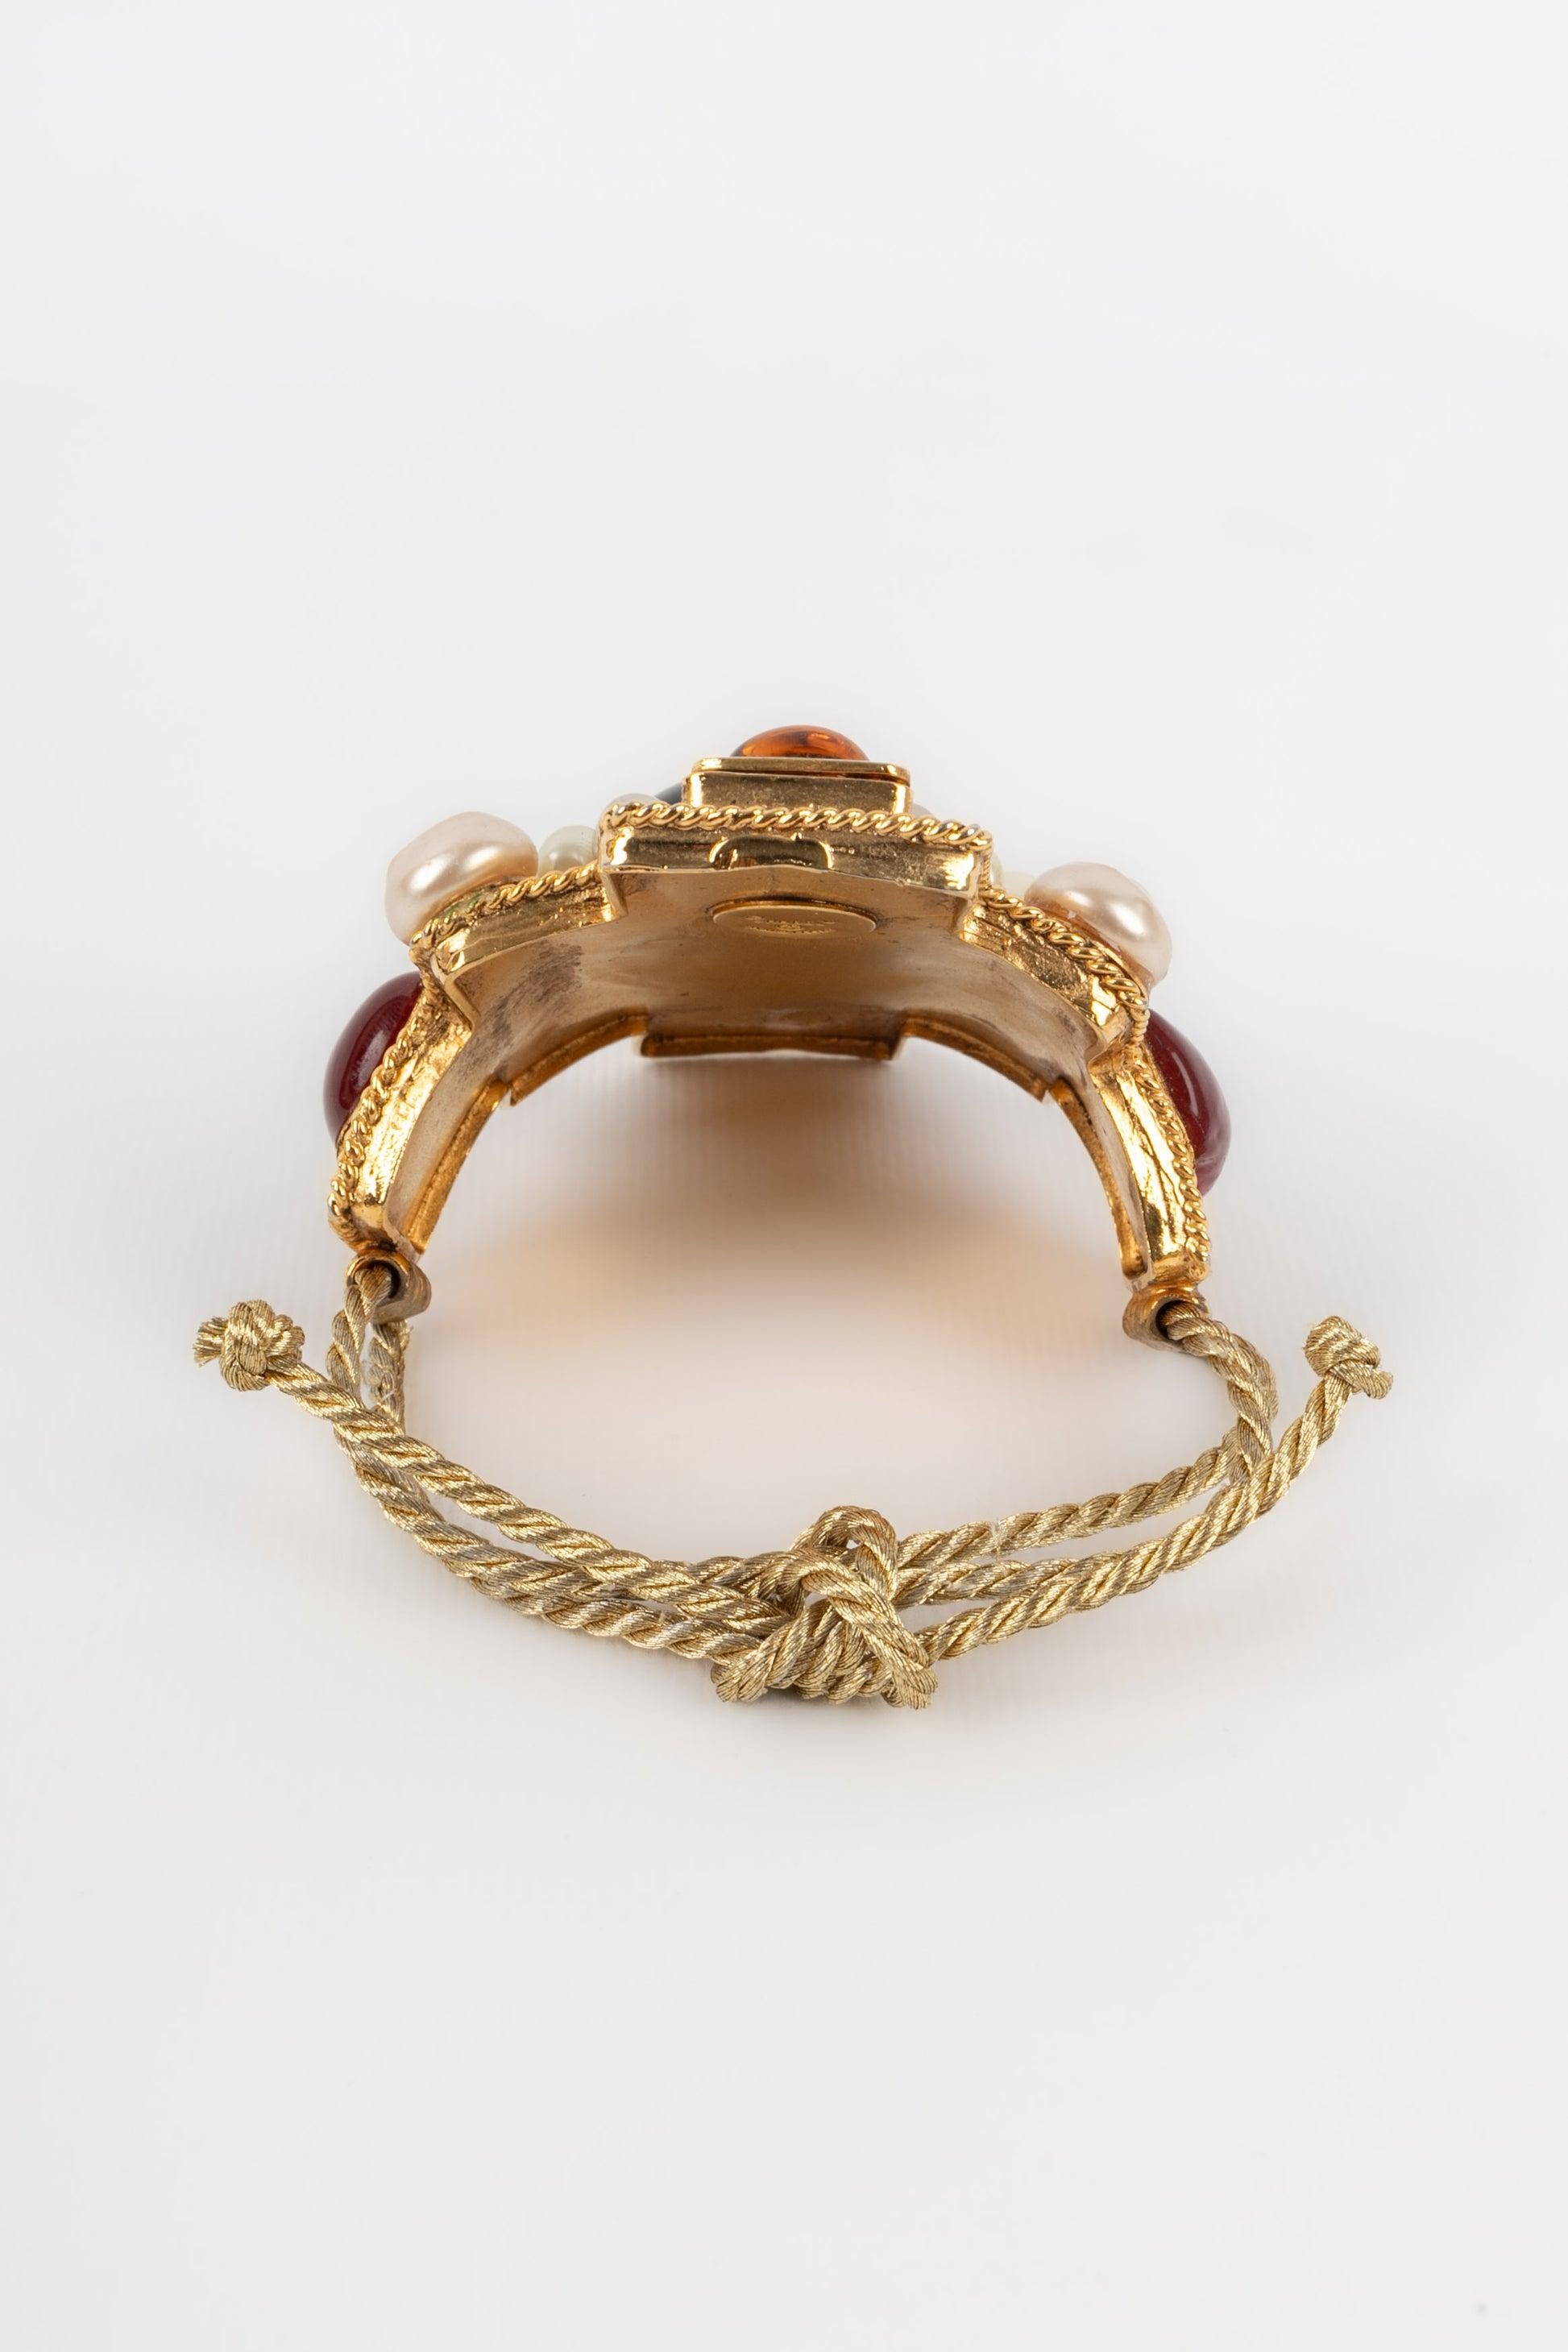 Women's Chanel Arm Bracelet in Golden Metal, 1990/1991